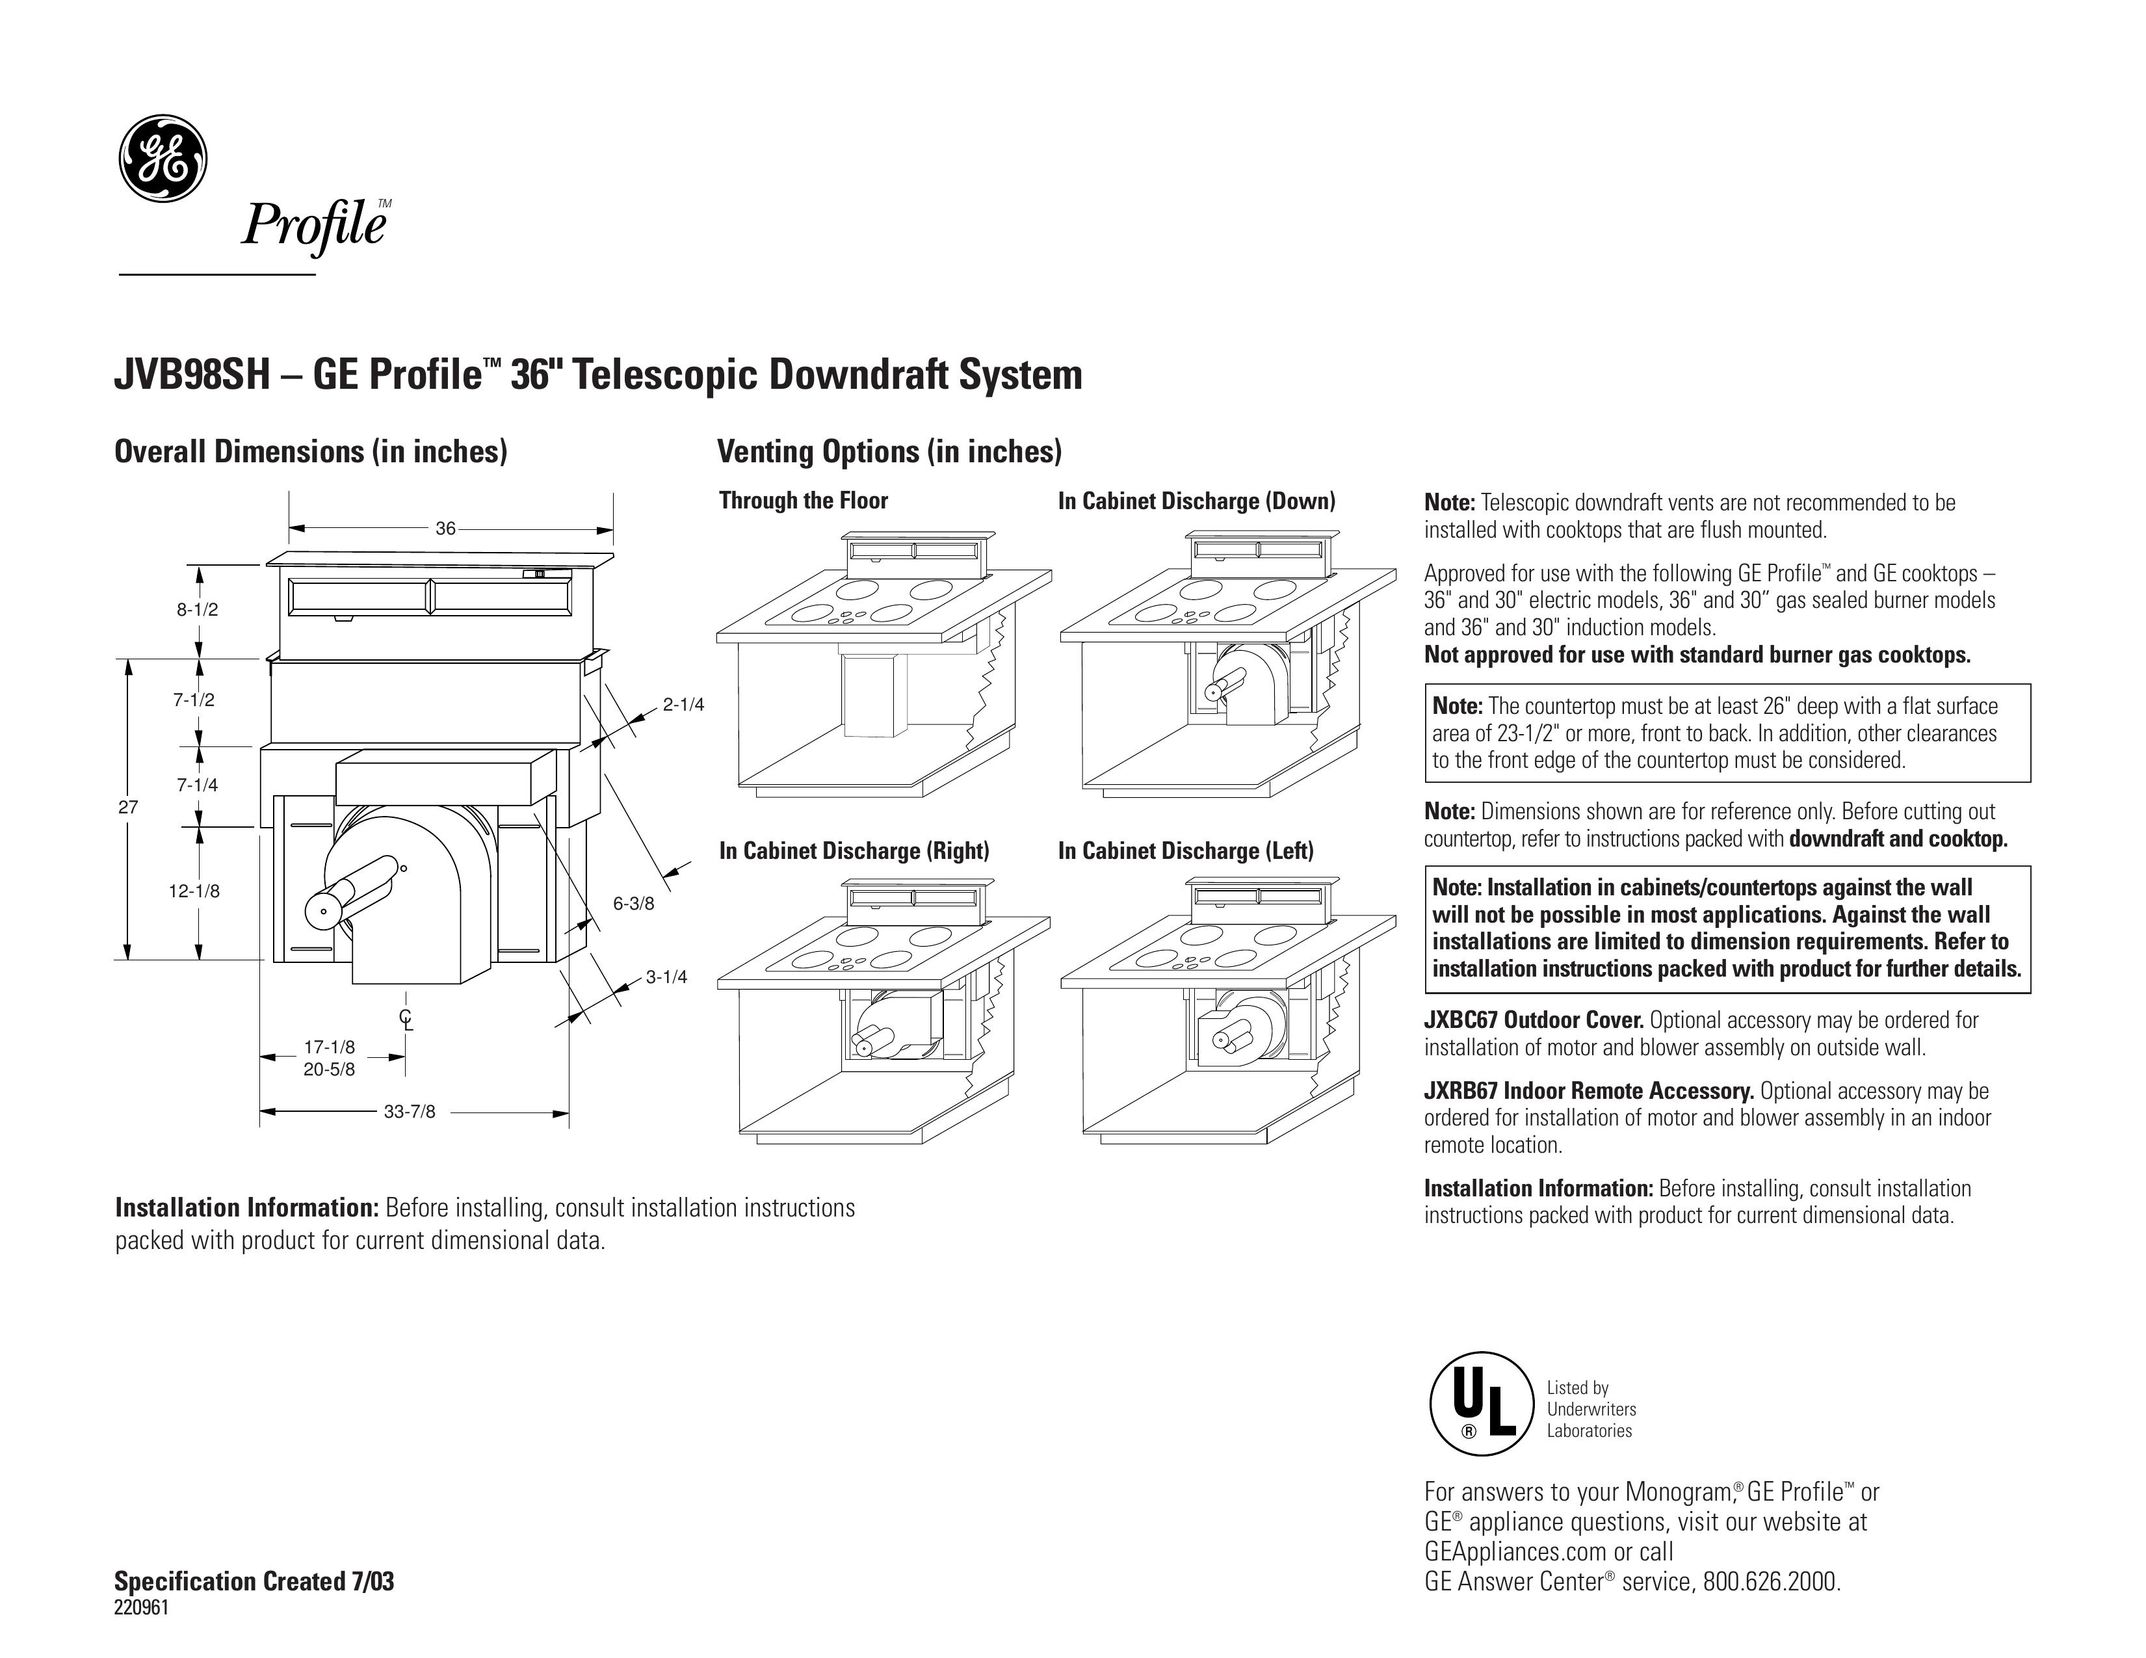 GE JVB98SH Flat Panel Television User Manual